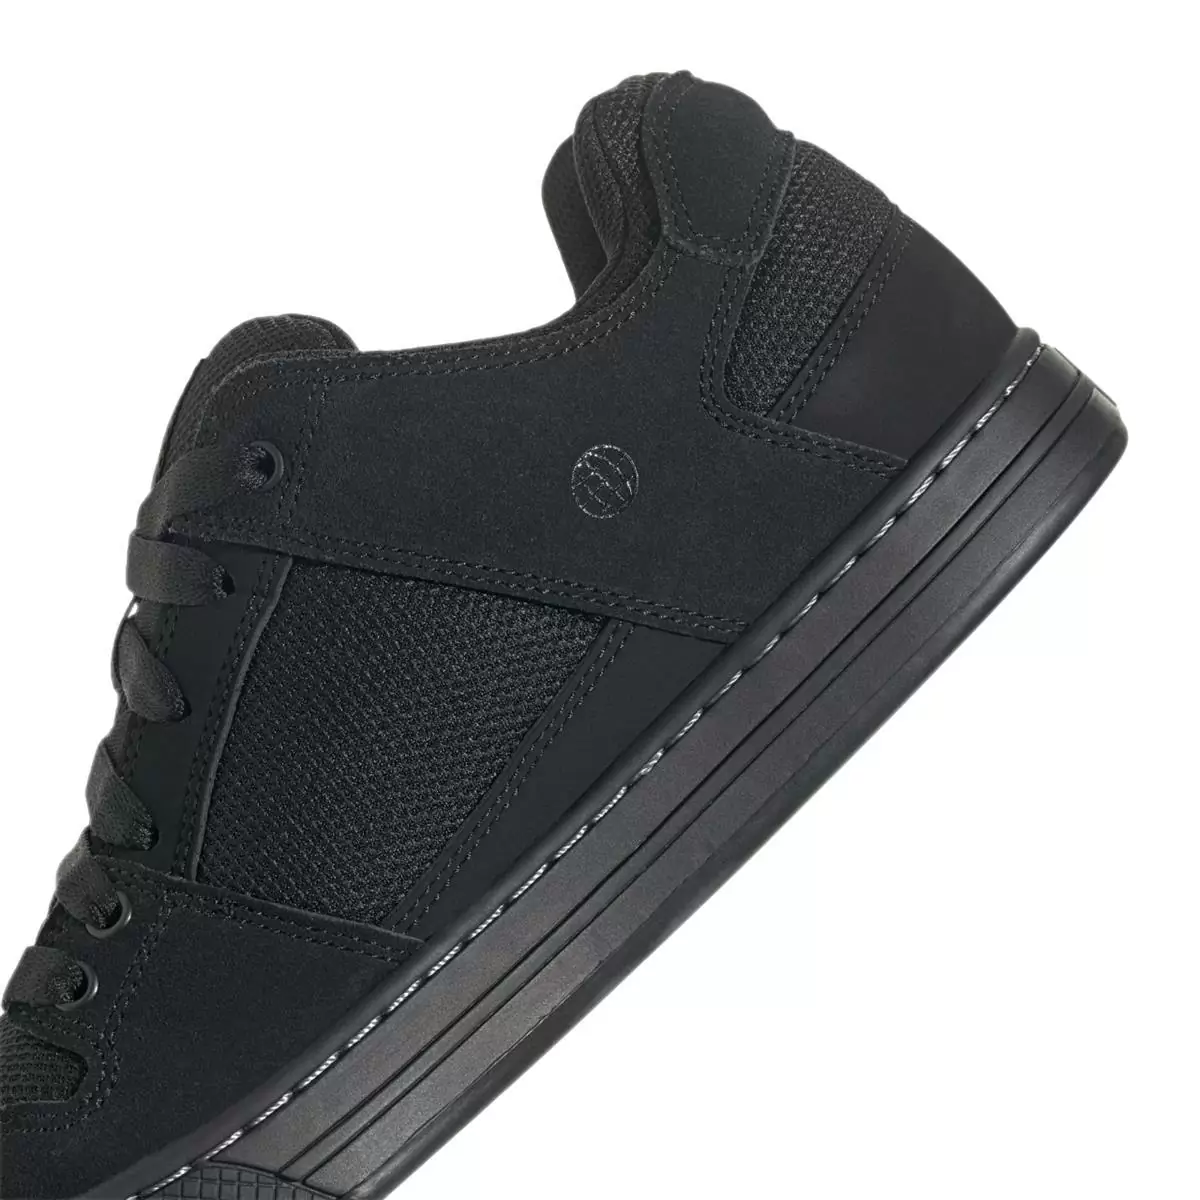 MTB Shoes Flat Freerider Black Size 44 #7